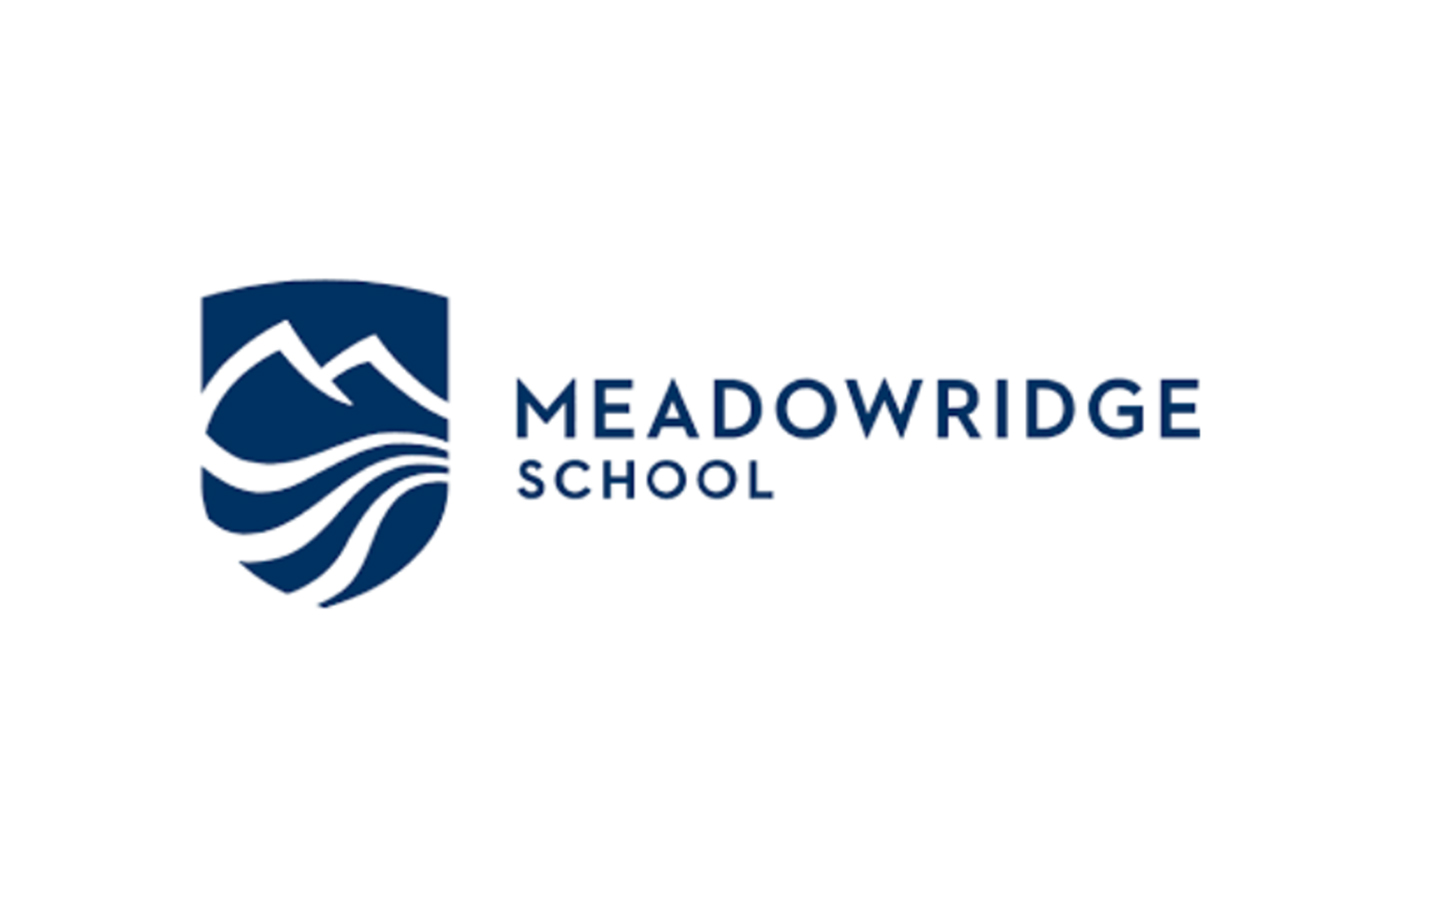 Meadowridge School Boundary Training